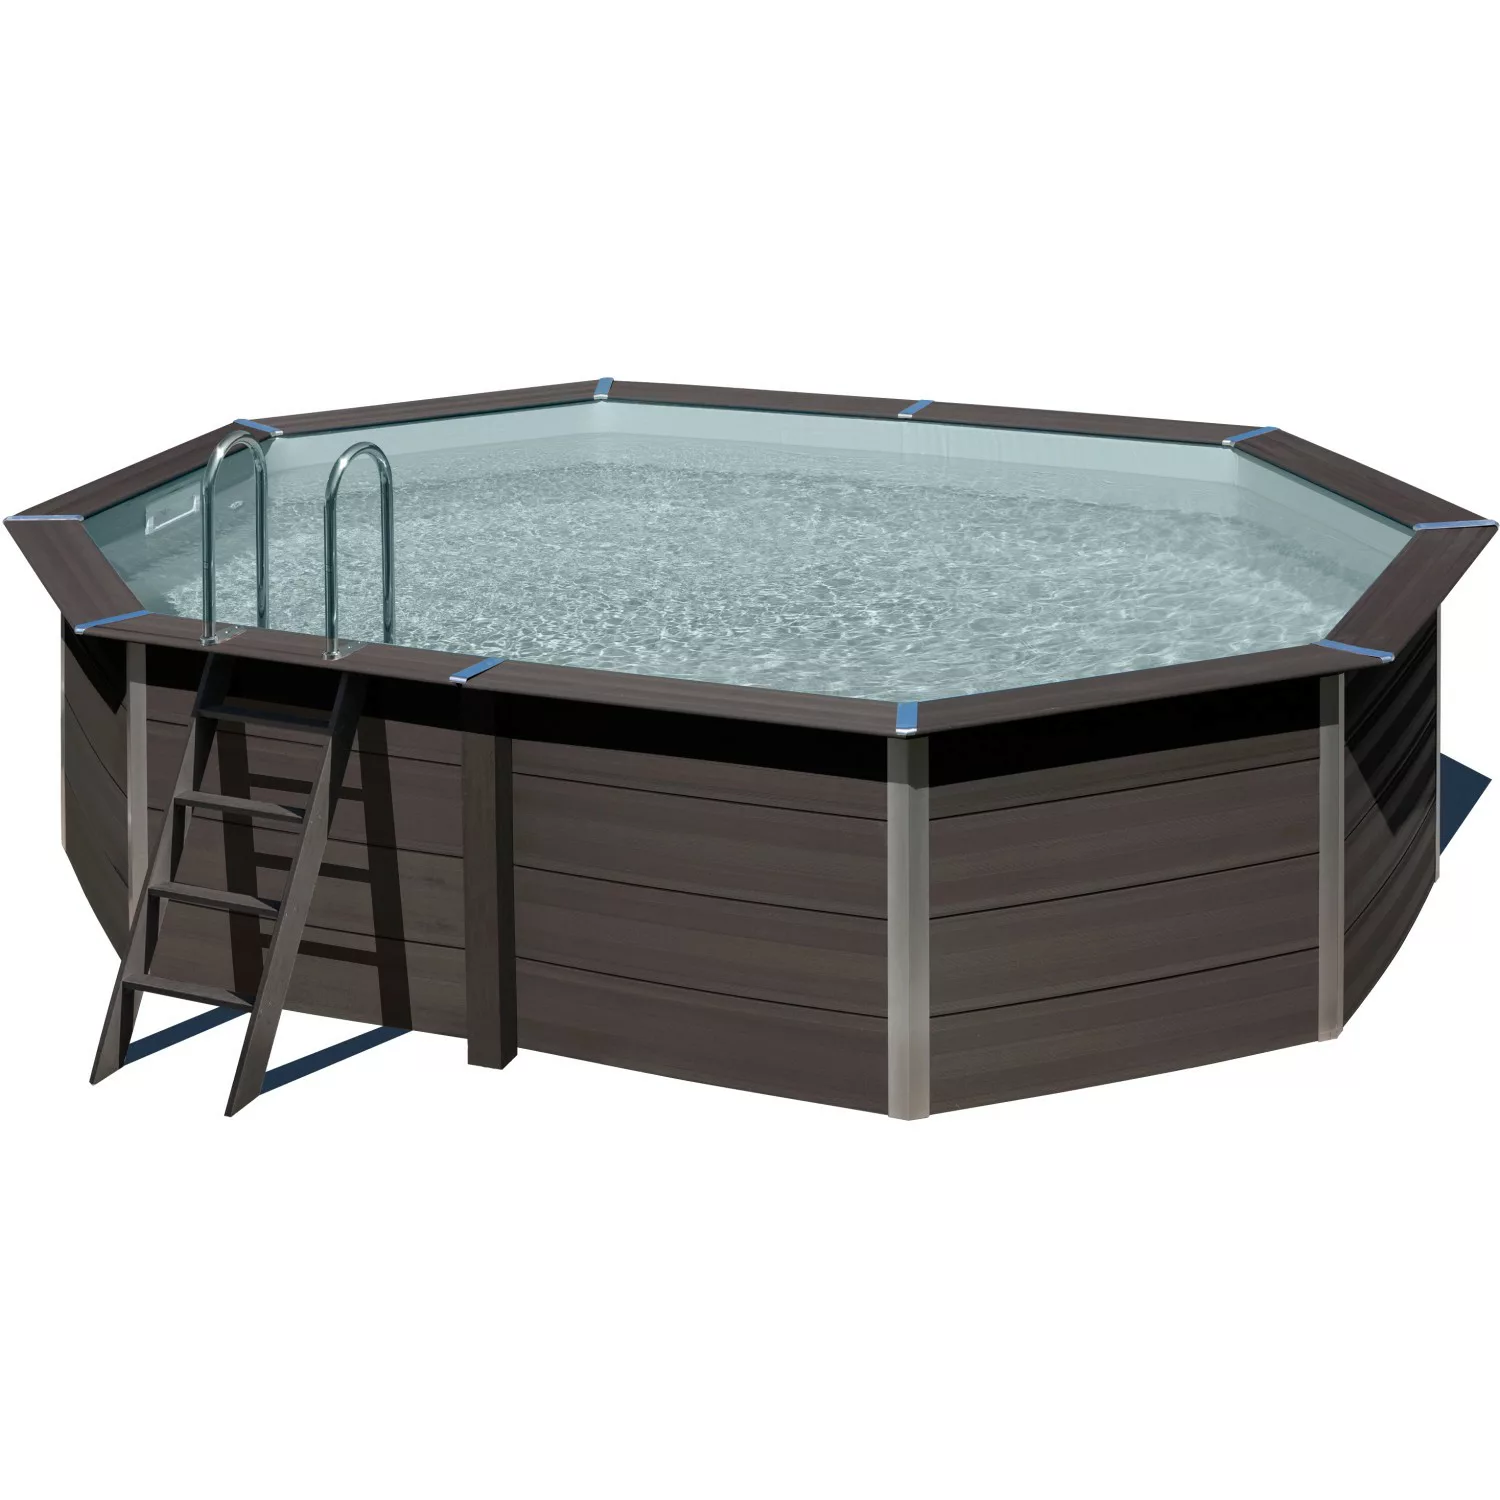 Gre Composite Pool Avantgarde Oval 524 cm x 386 cm x 124 cm m. Beleuchtung günstig online kaufen